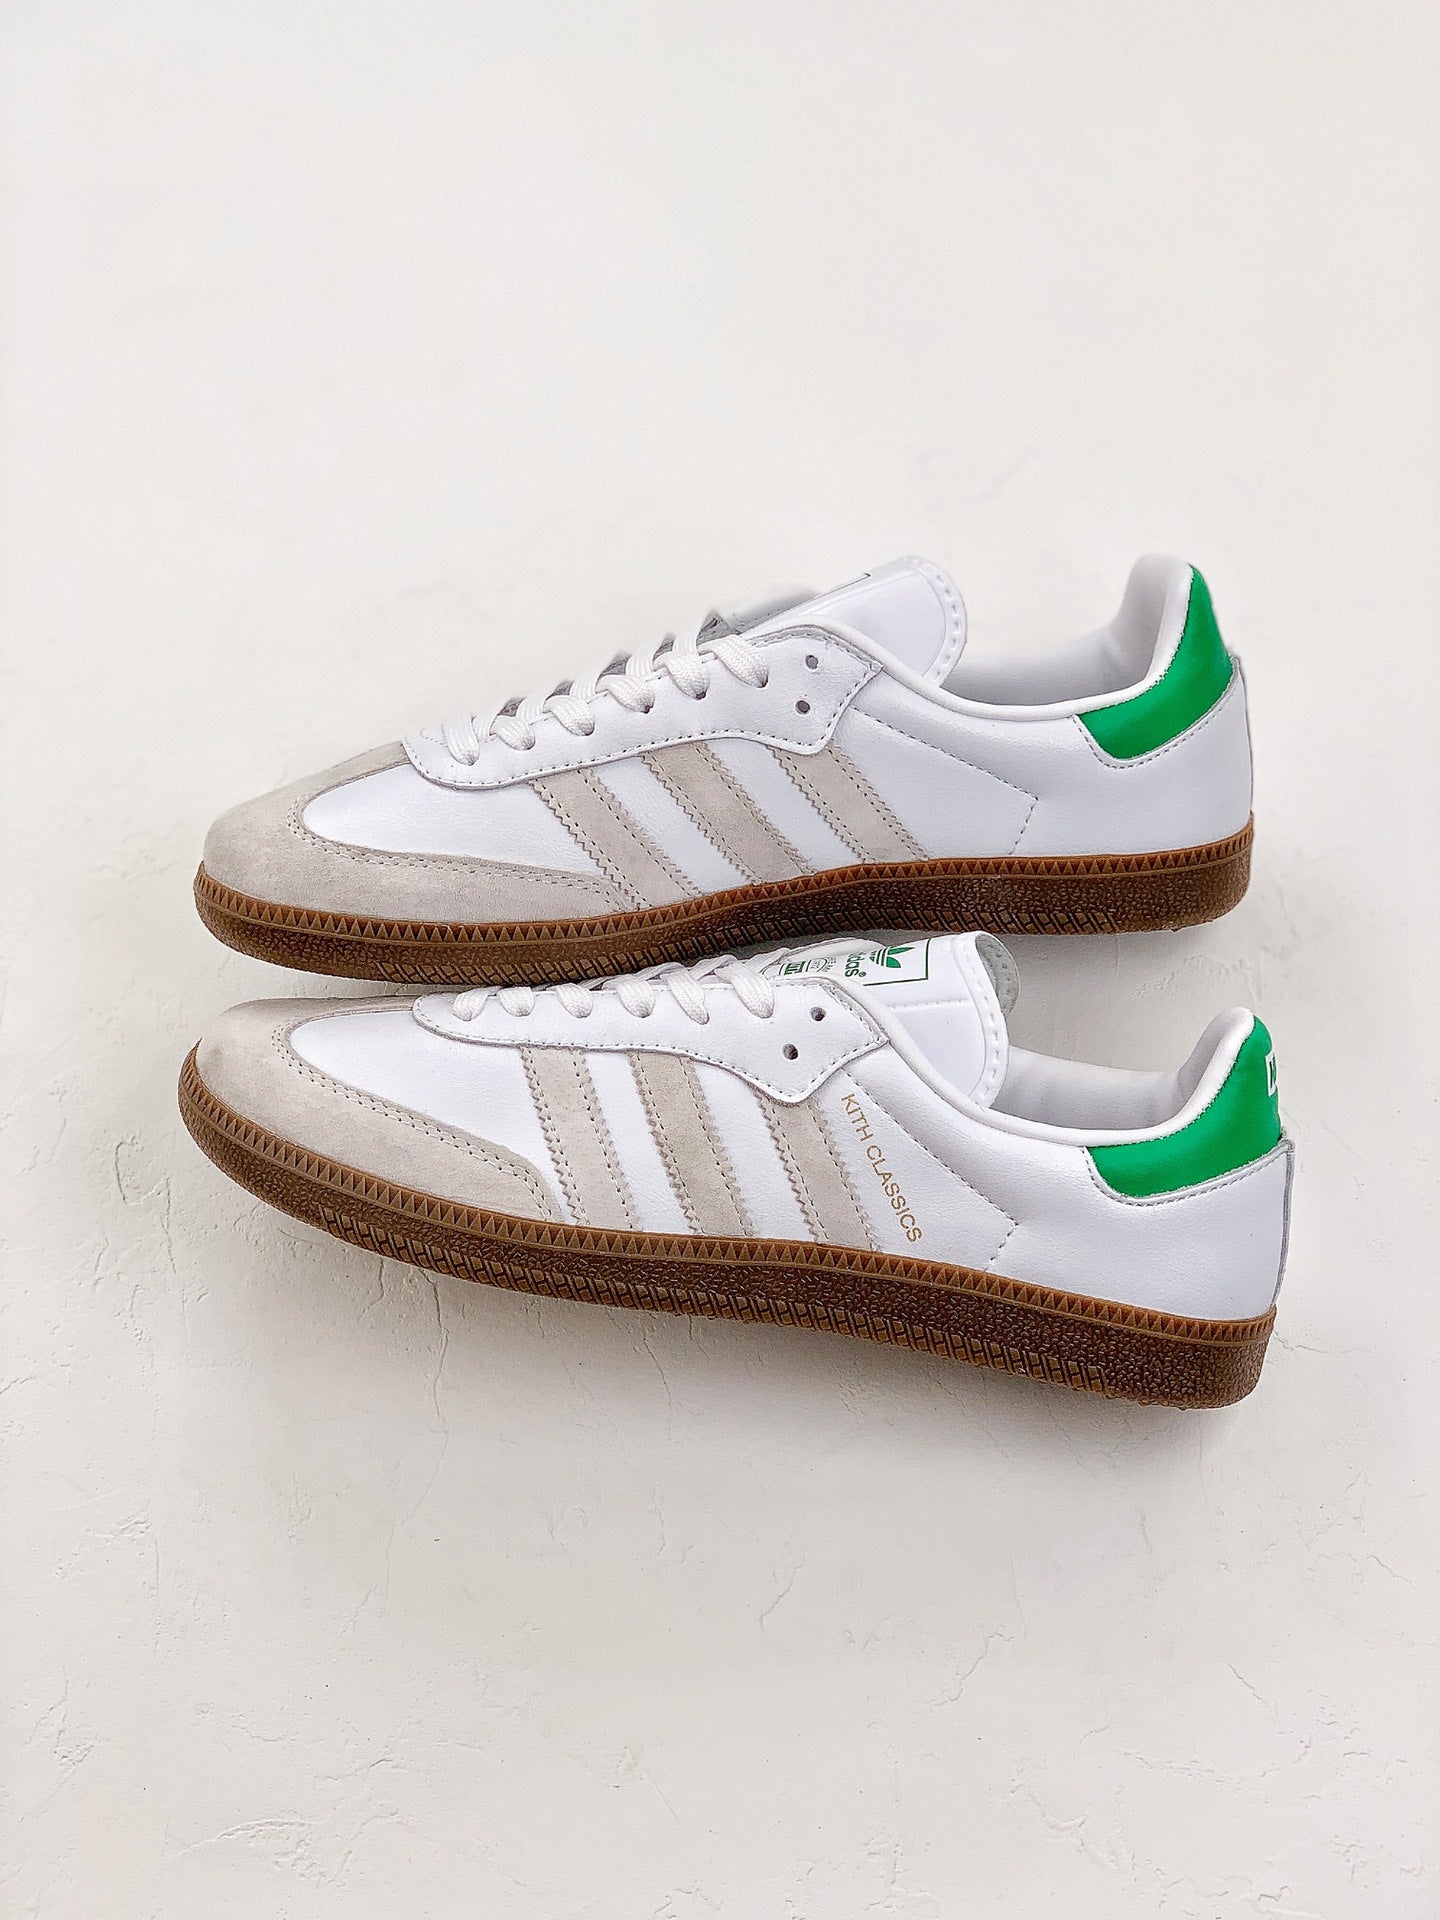 Adidas samba white green shoes